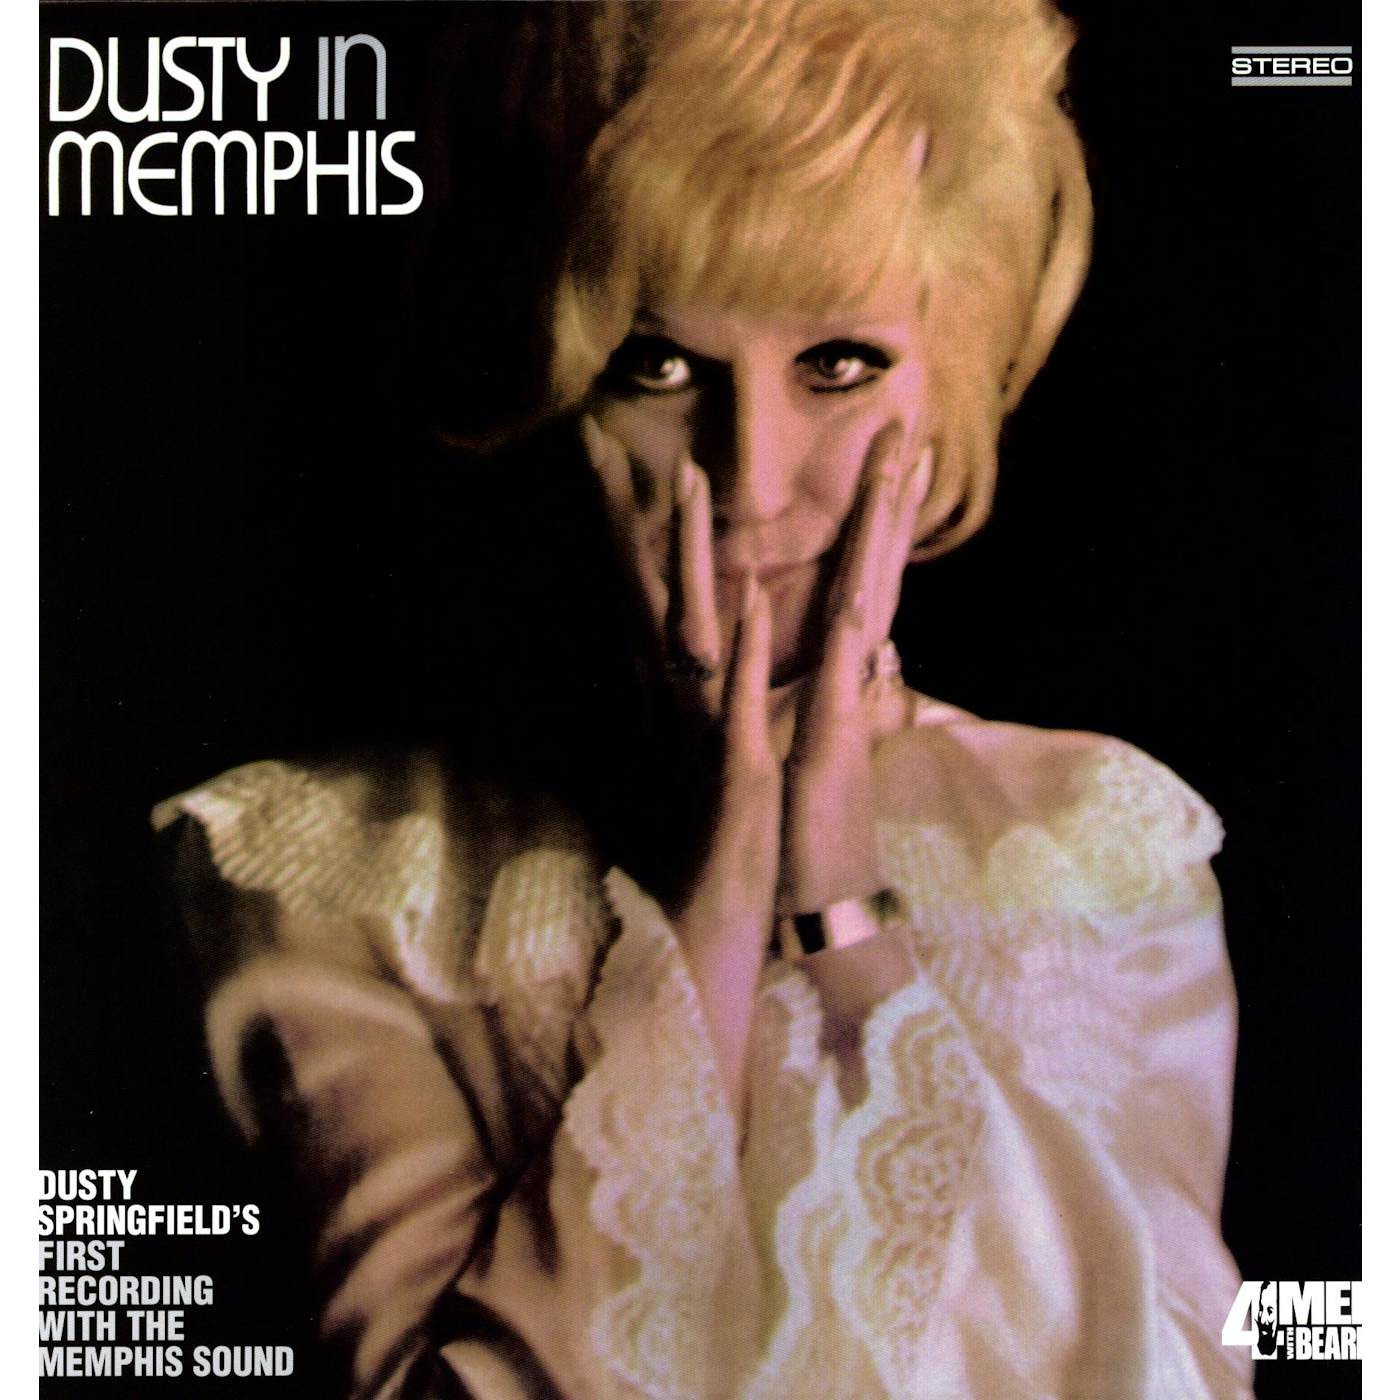 Dusty Springfield Dusty In Memphis Vinyl Record